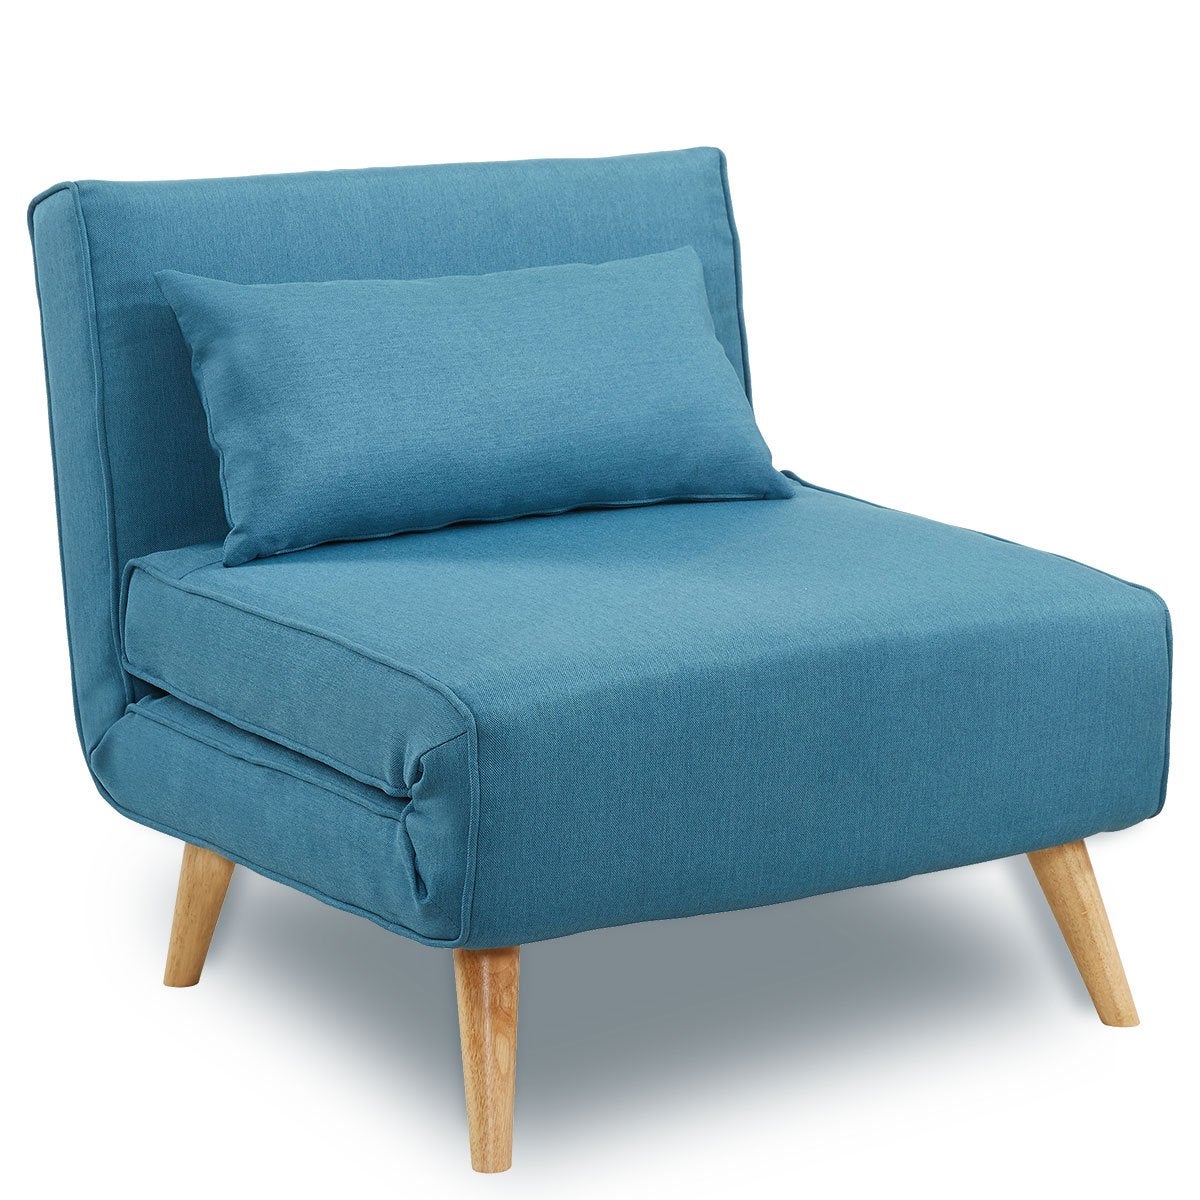 Sarantino Linen Corner Sofa Bed Comfortable Chair Single Seater Adjustable Wooden Frame Blue